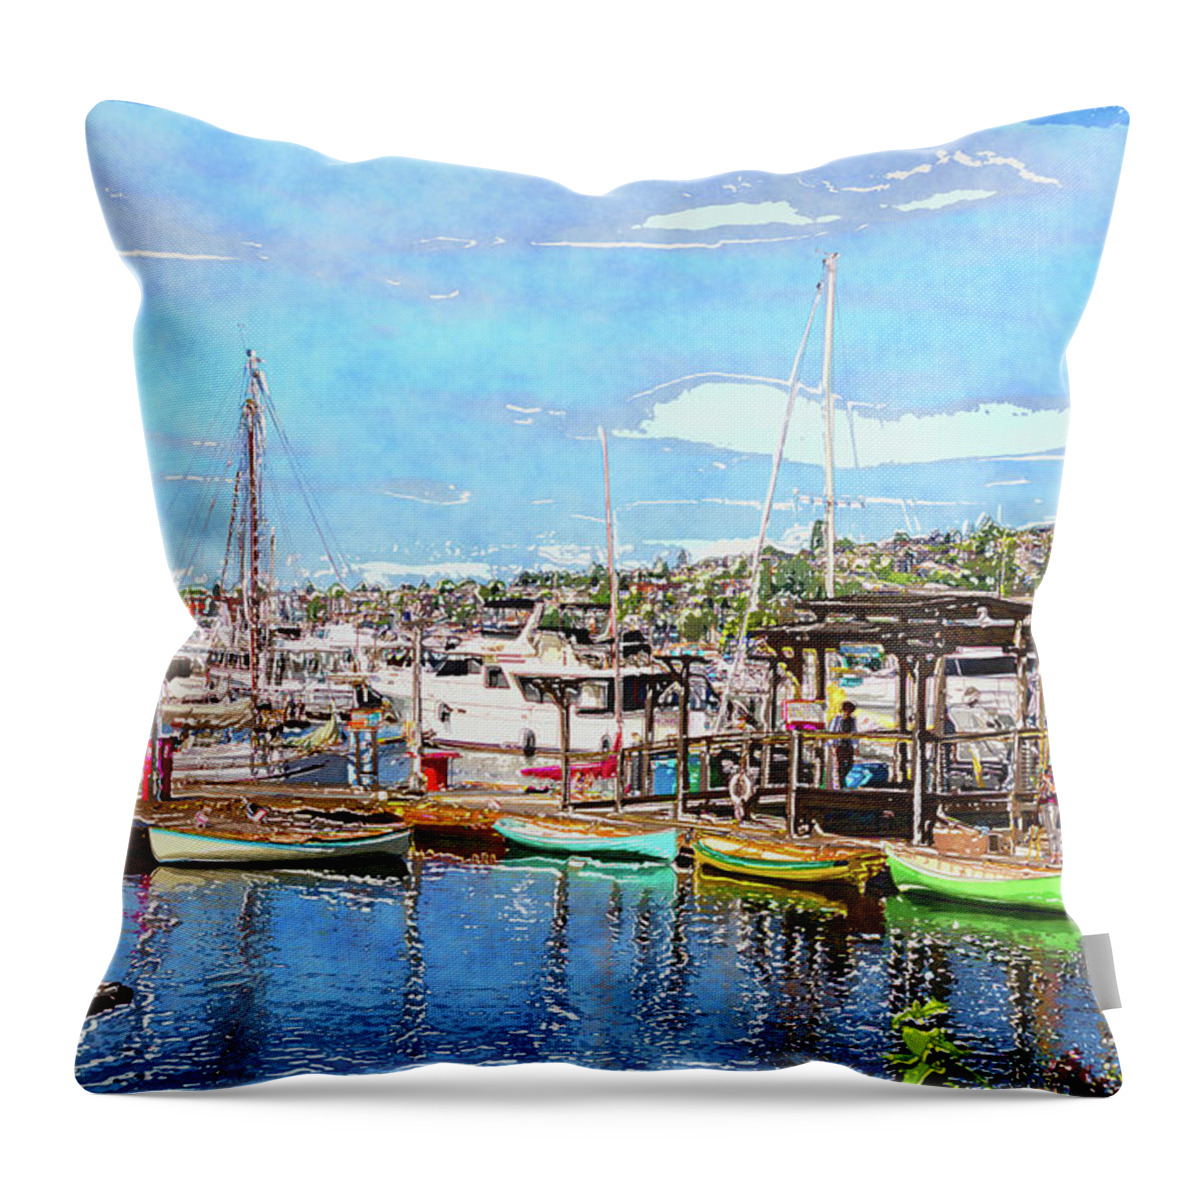 Lake Union Seattle Throw Pillow featuring the digital art Lake Union Marina by SnapHappy Photos